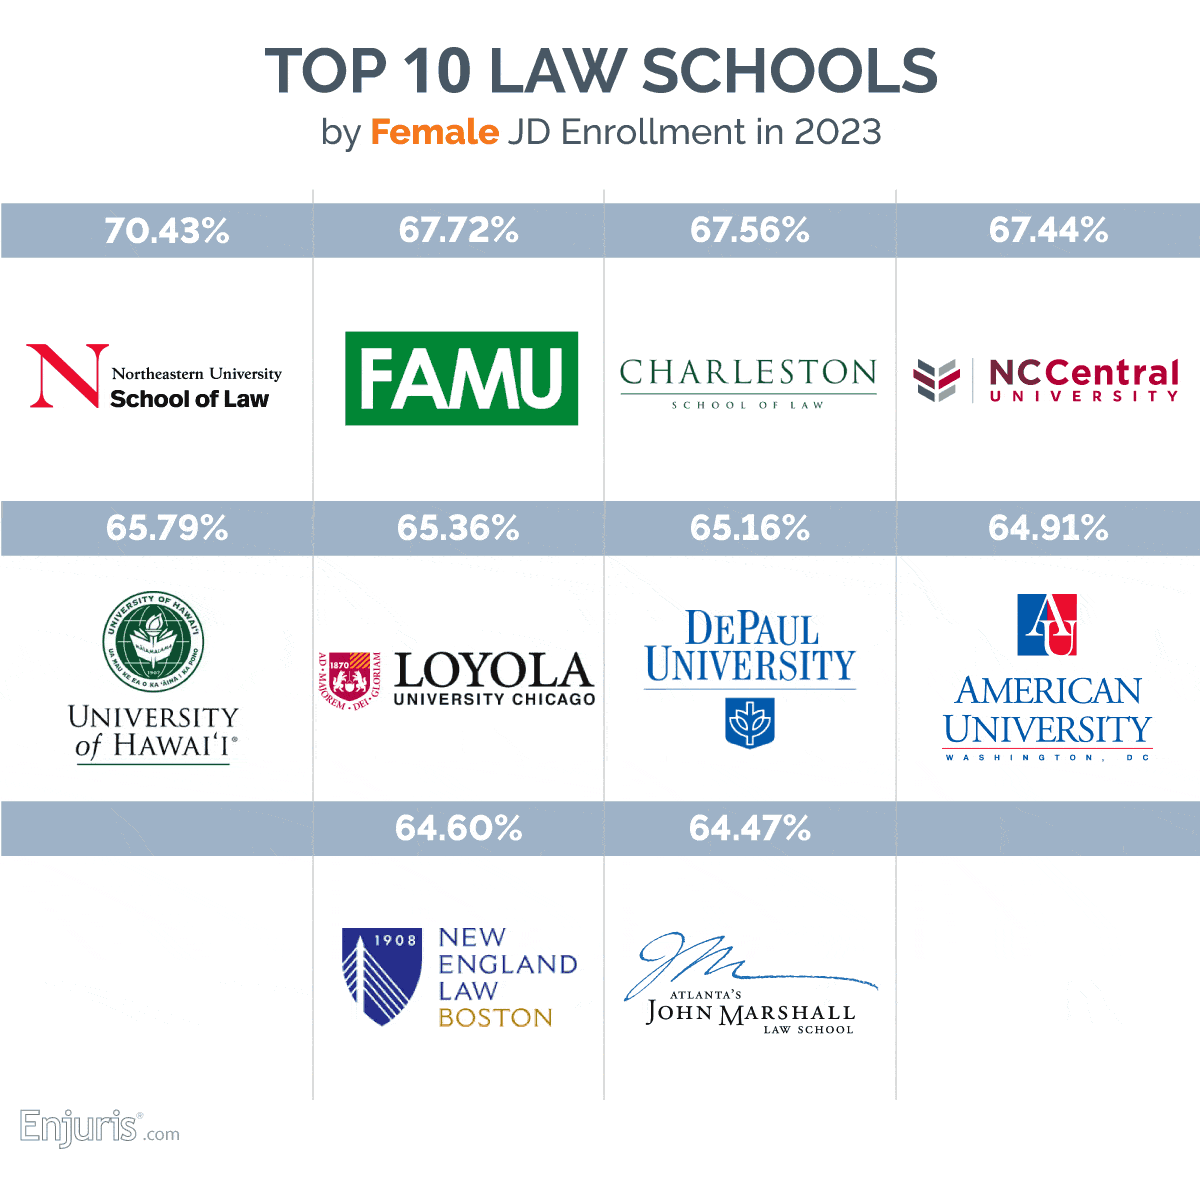 Top 10 law schools by female JD enrollment 2023